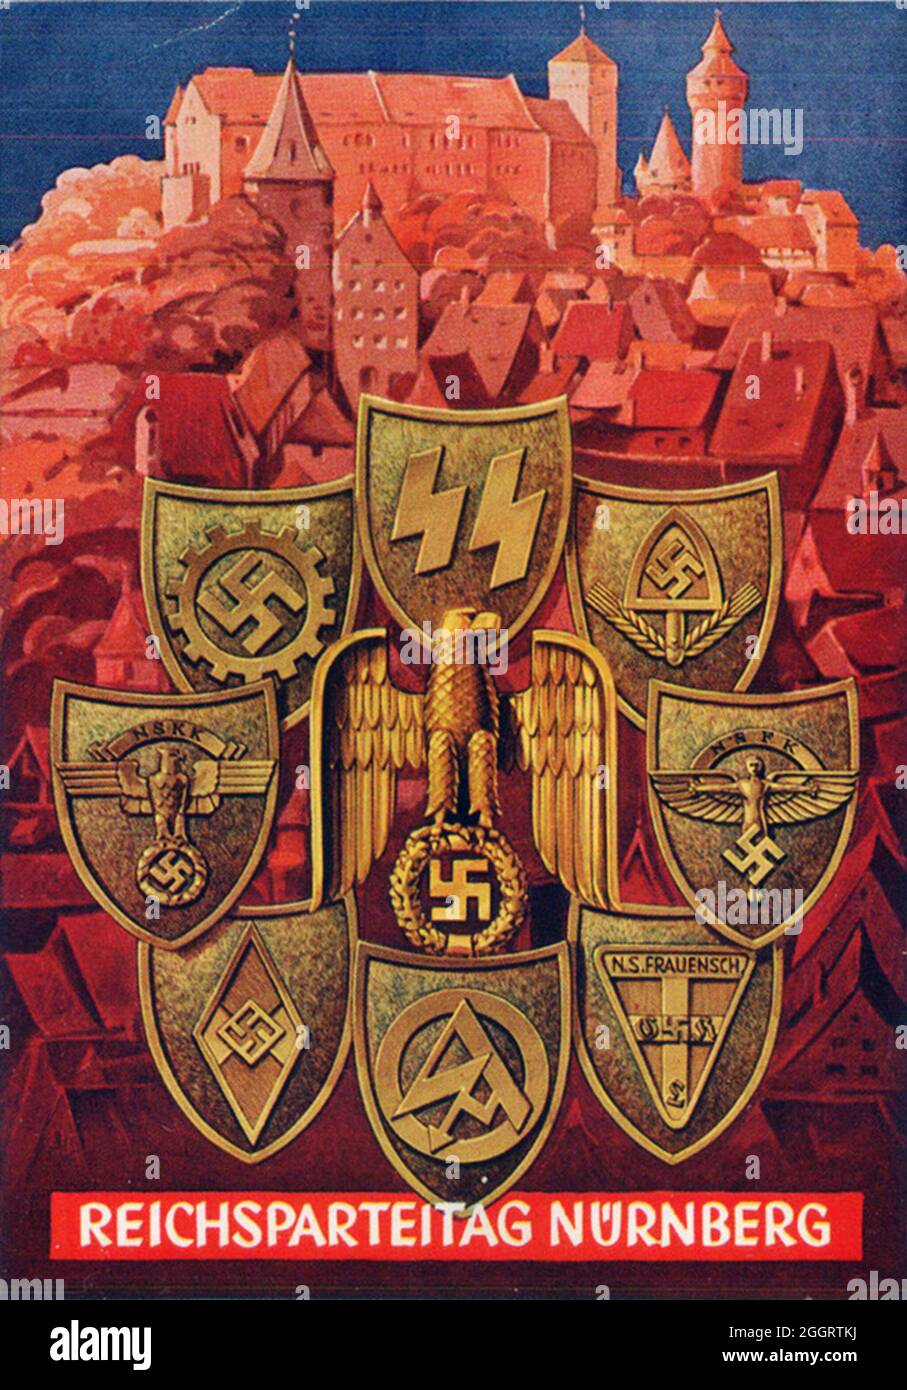 Un poster d'epoca per il raduno nazista di Norimberga che mostra gli emblemi di DAF (Deutsche Arbeitsfront, fronte del lavoro tedesco), SS (Schutzstaffel), RAD (Reichsarbeitsdienst, Reich Labor Service), NSKK (Nationalsozialistisches Kraftfahrkorps, National Socialist Motor Corps), NSFK (Nationalsozialistisches Fliegerkorps, National Socialist Flyers Corps), HJ (Hitlerjugend, Hitler Youth), SA (Sturmabteilung) e NS-Fraensuchaft's League (National Socialist's League) Foto Stock